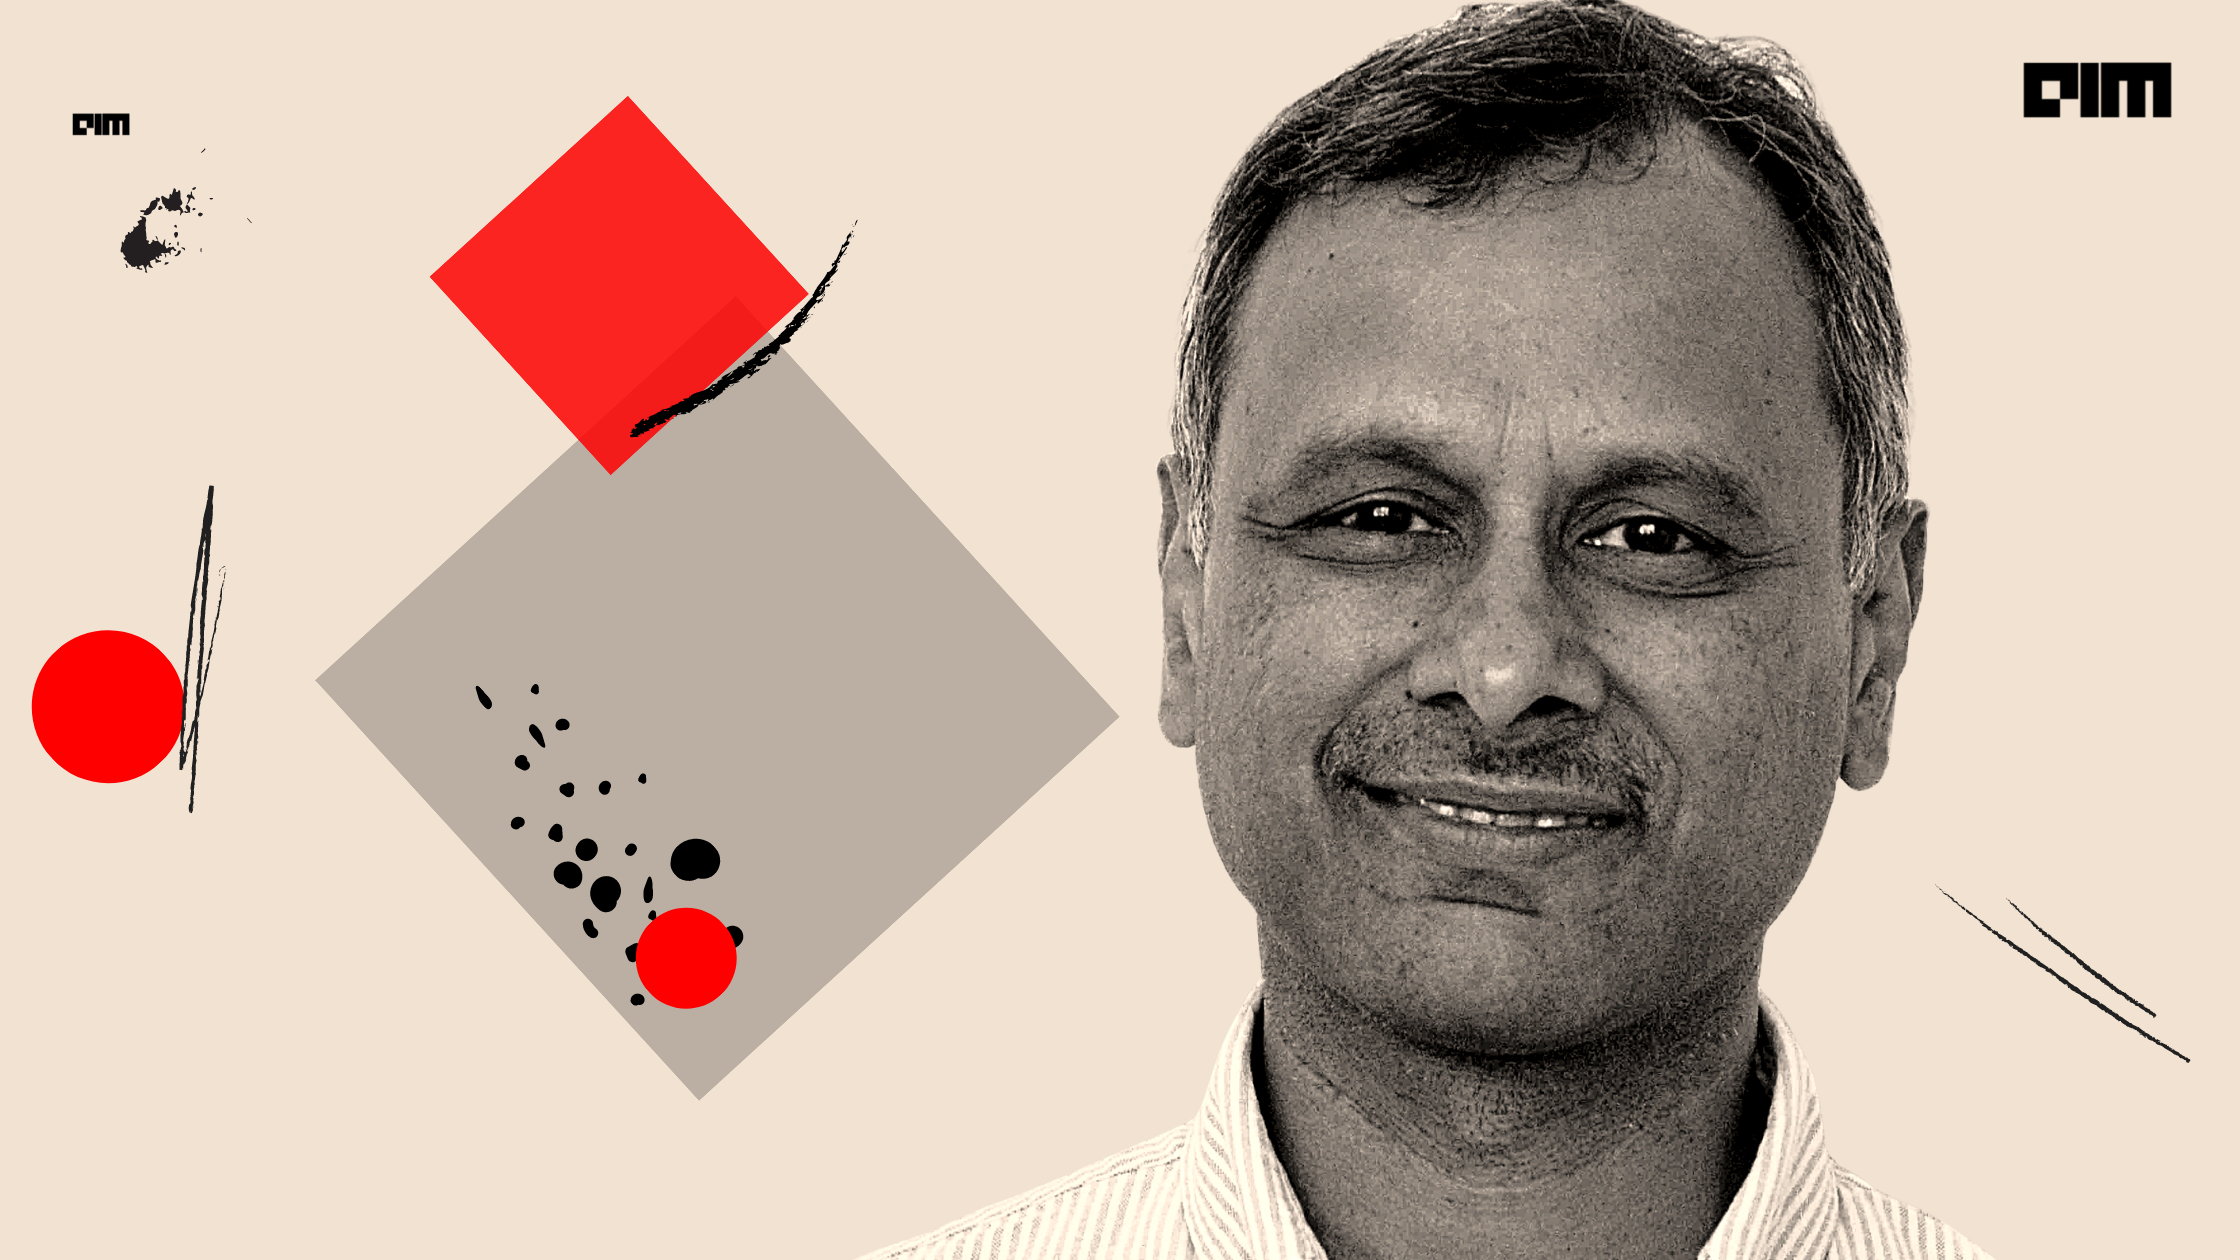 Manish Gupta, Director at Google Research India